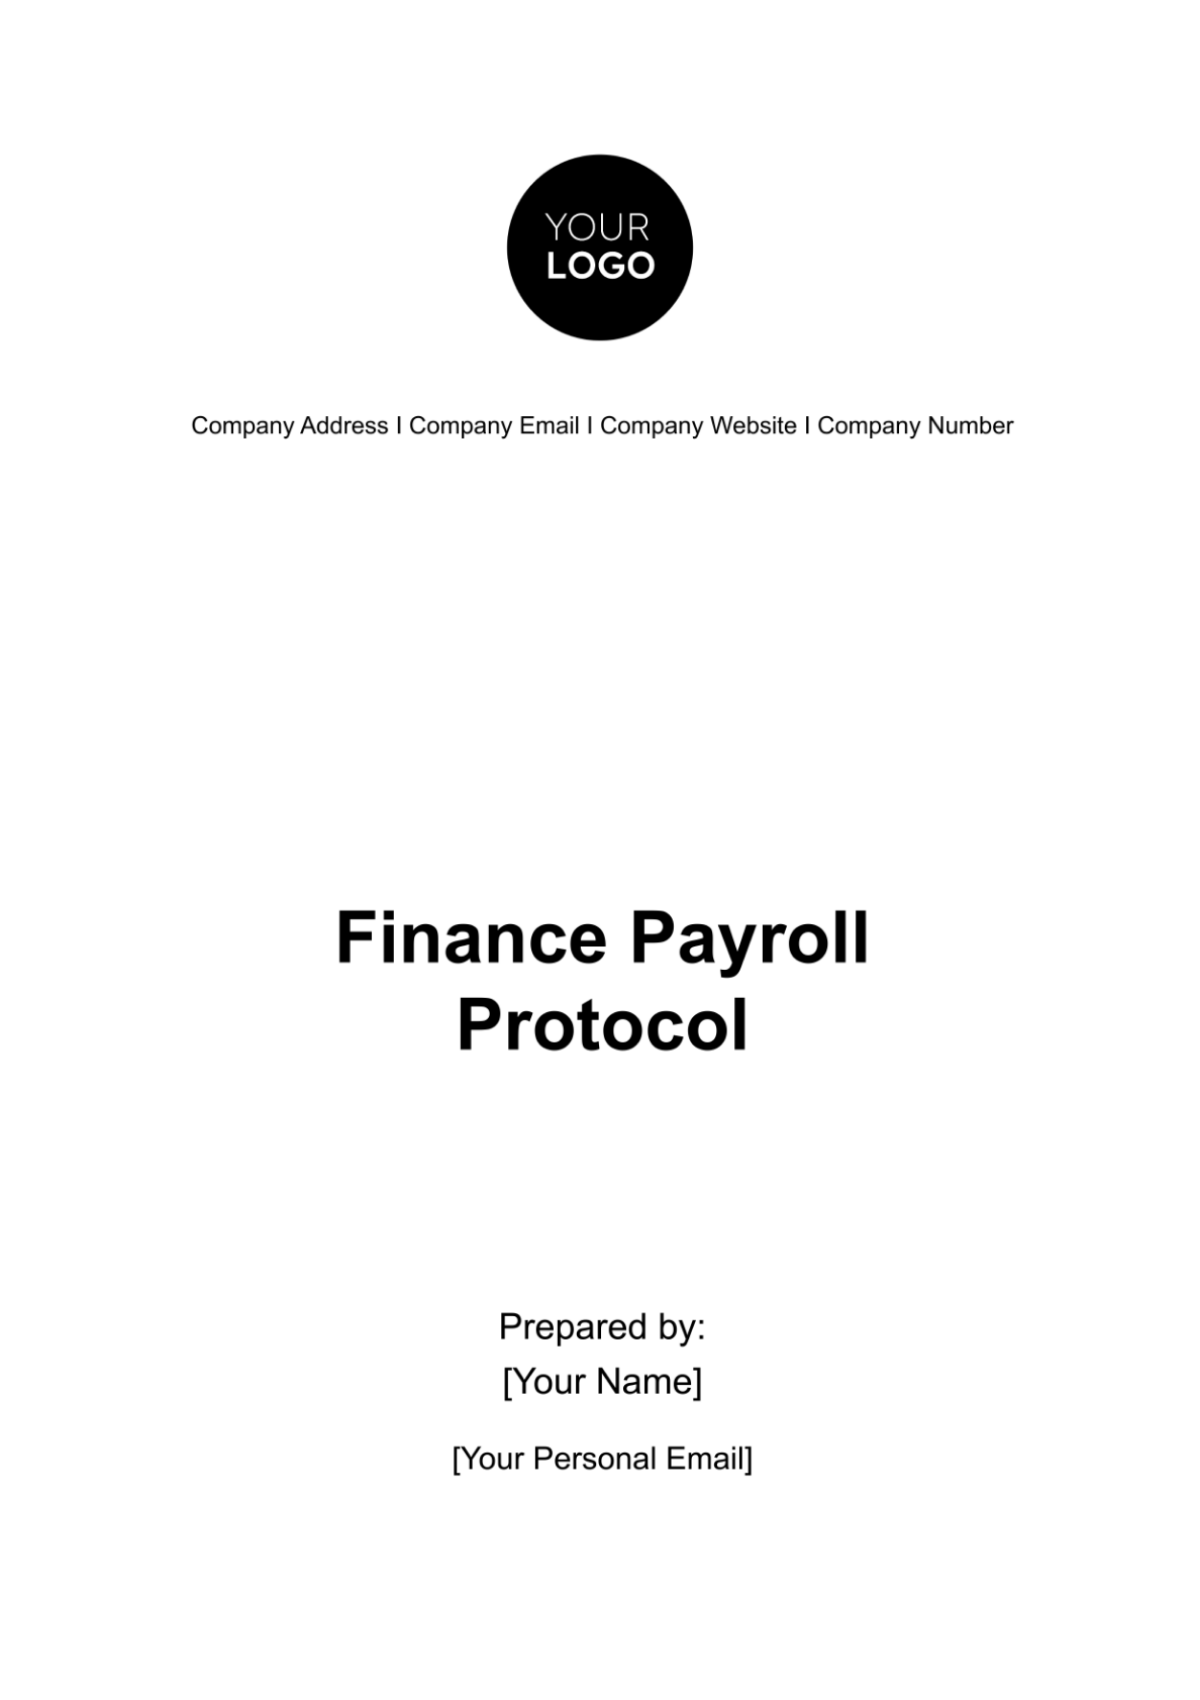 Finance Payroll Protocol Template